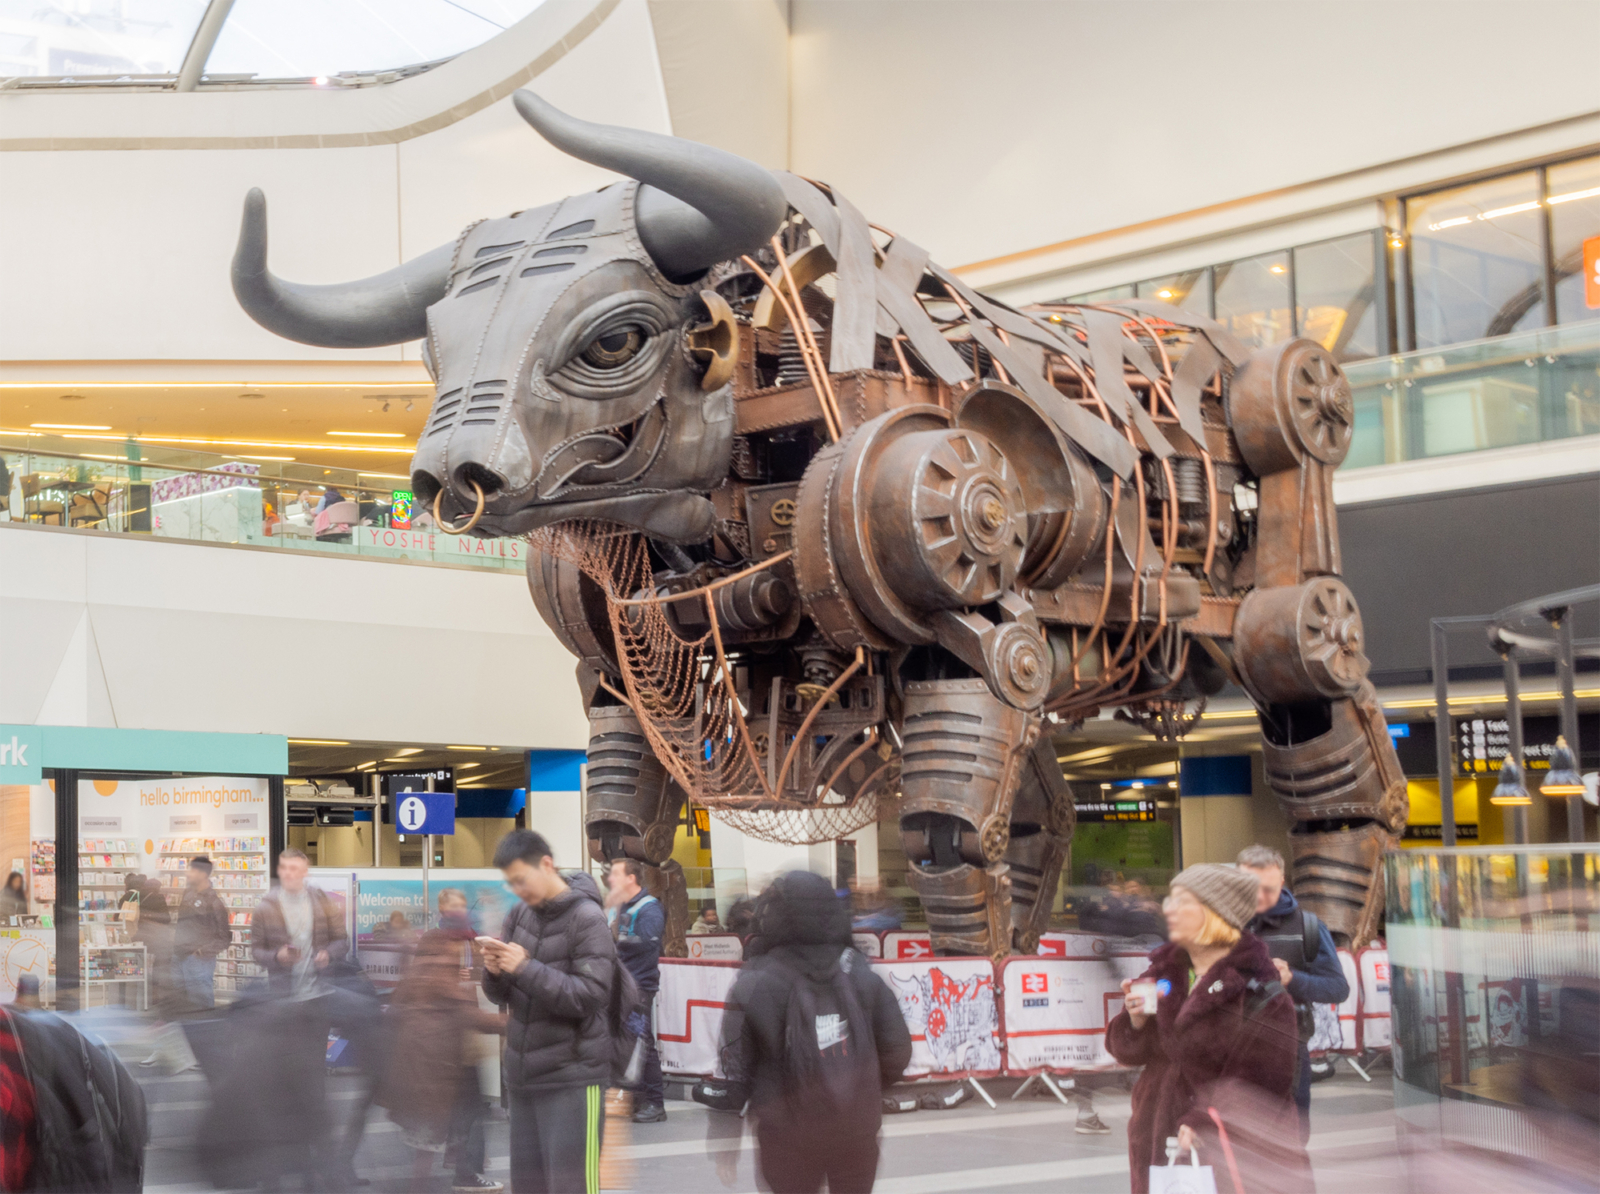 The mechanical bull in Birmingham